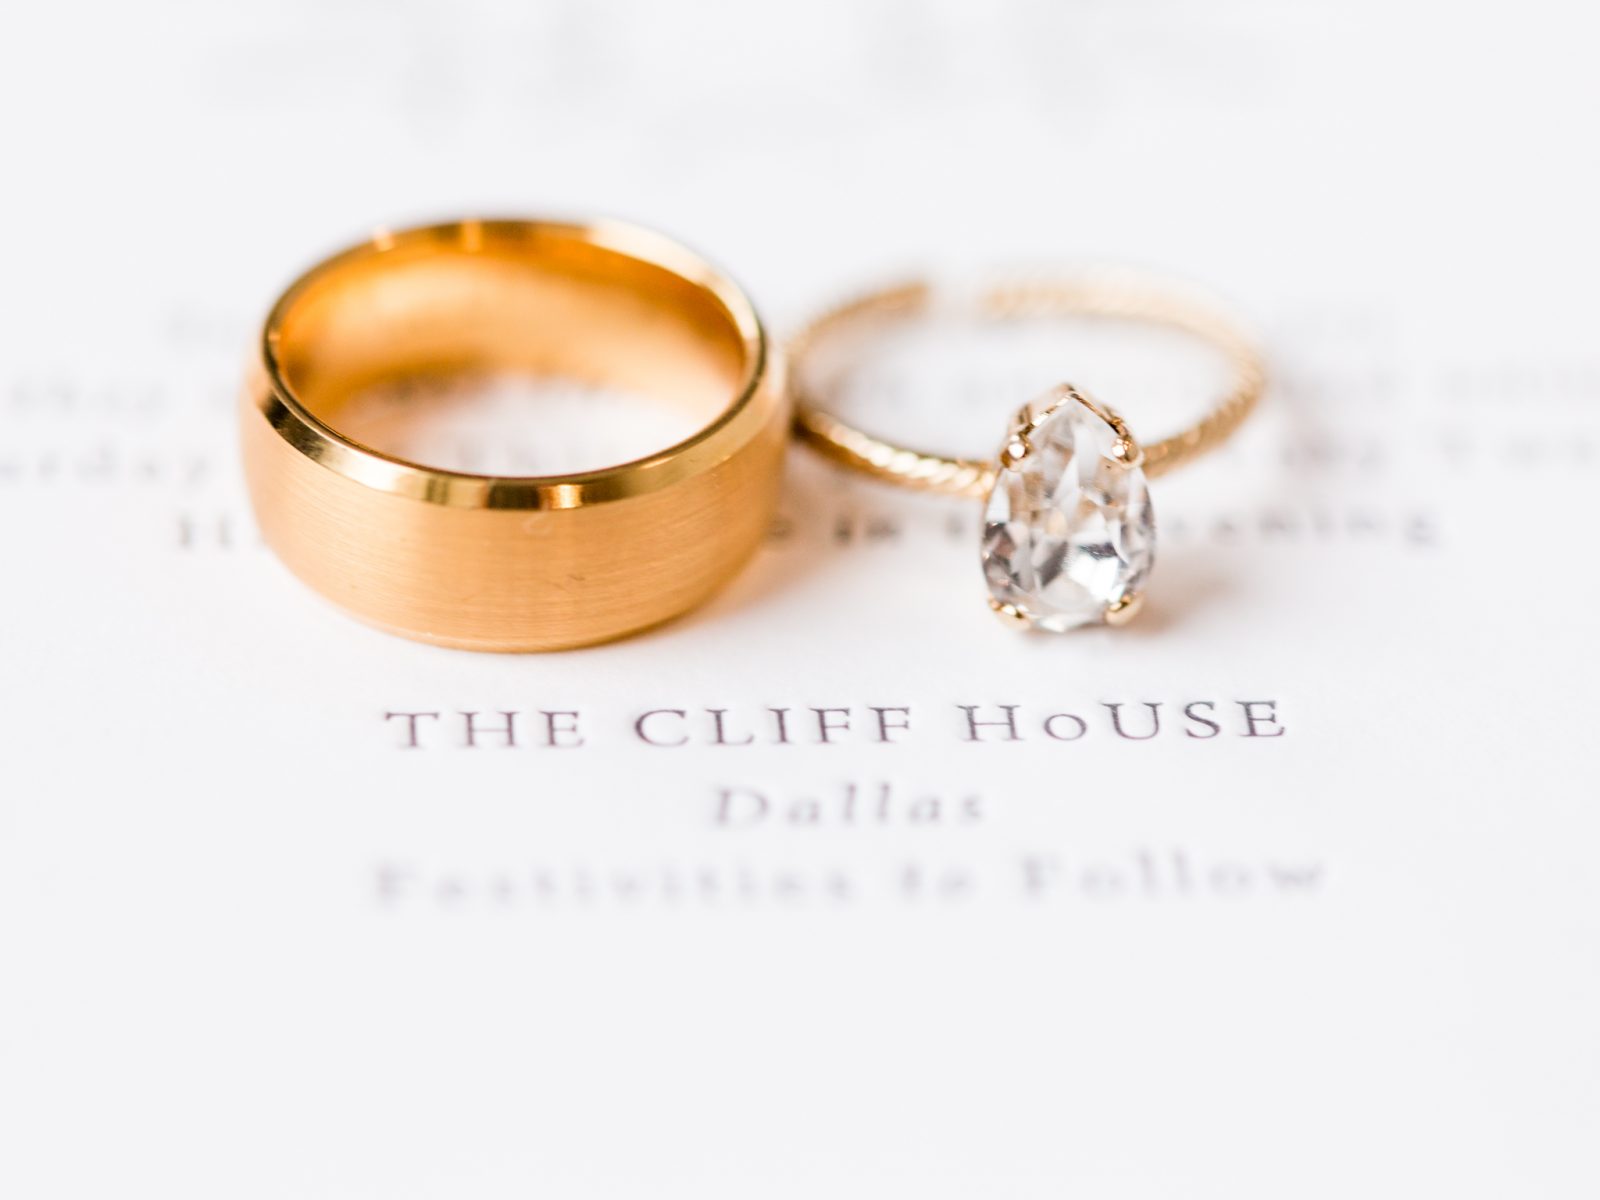 Cliff House | Dallas Wedding Photographer | Sami Kathryn Photography